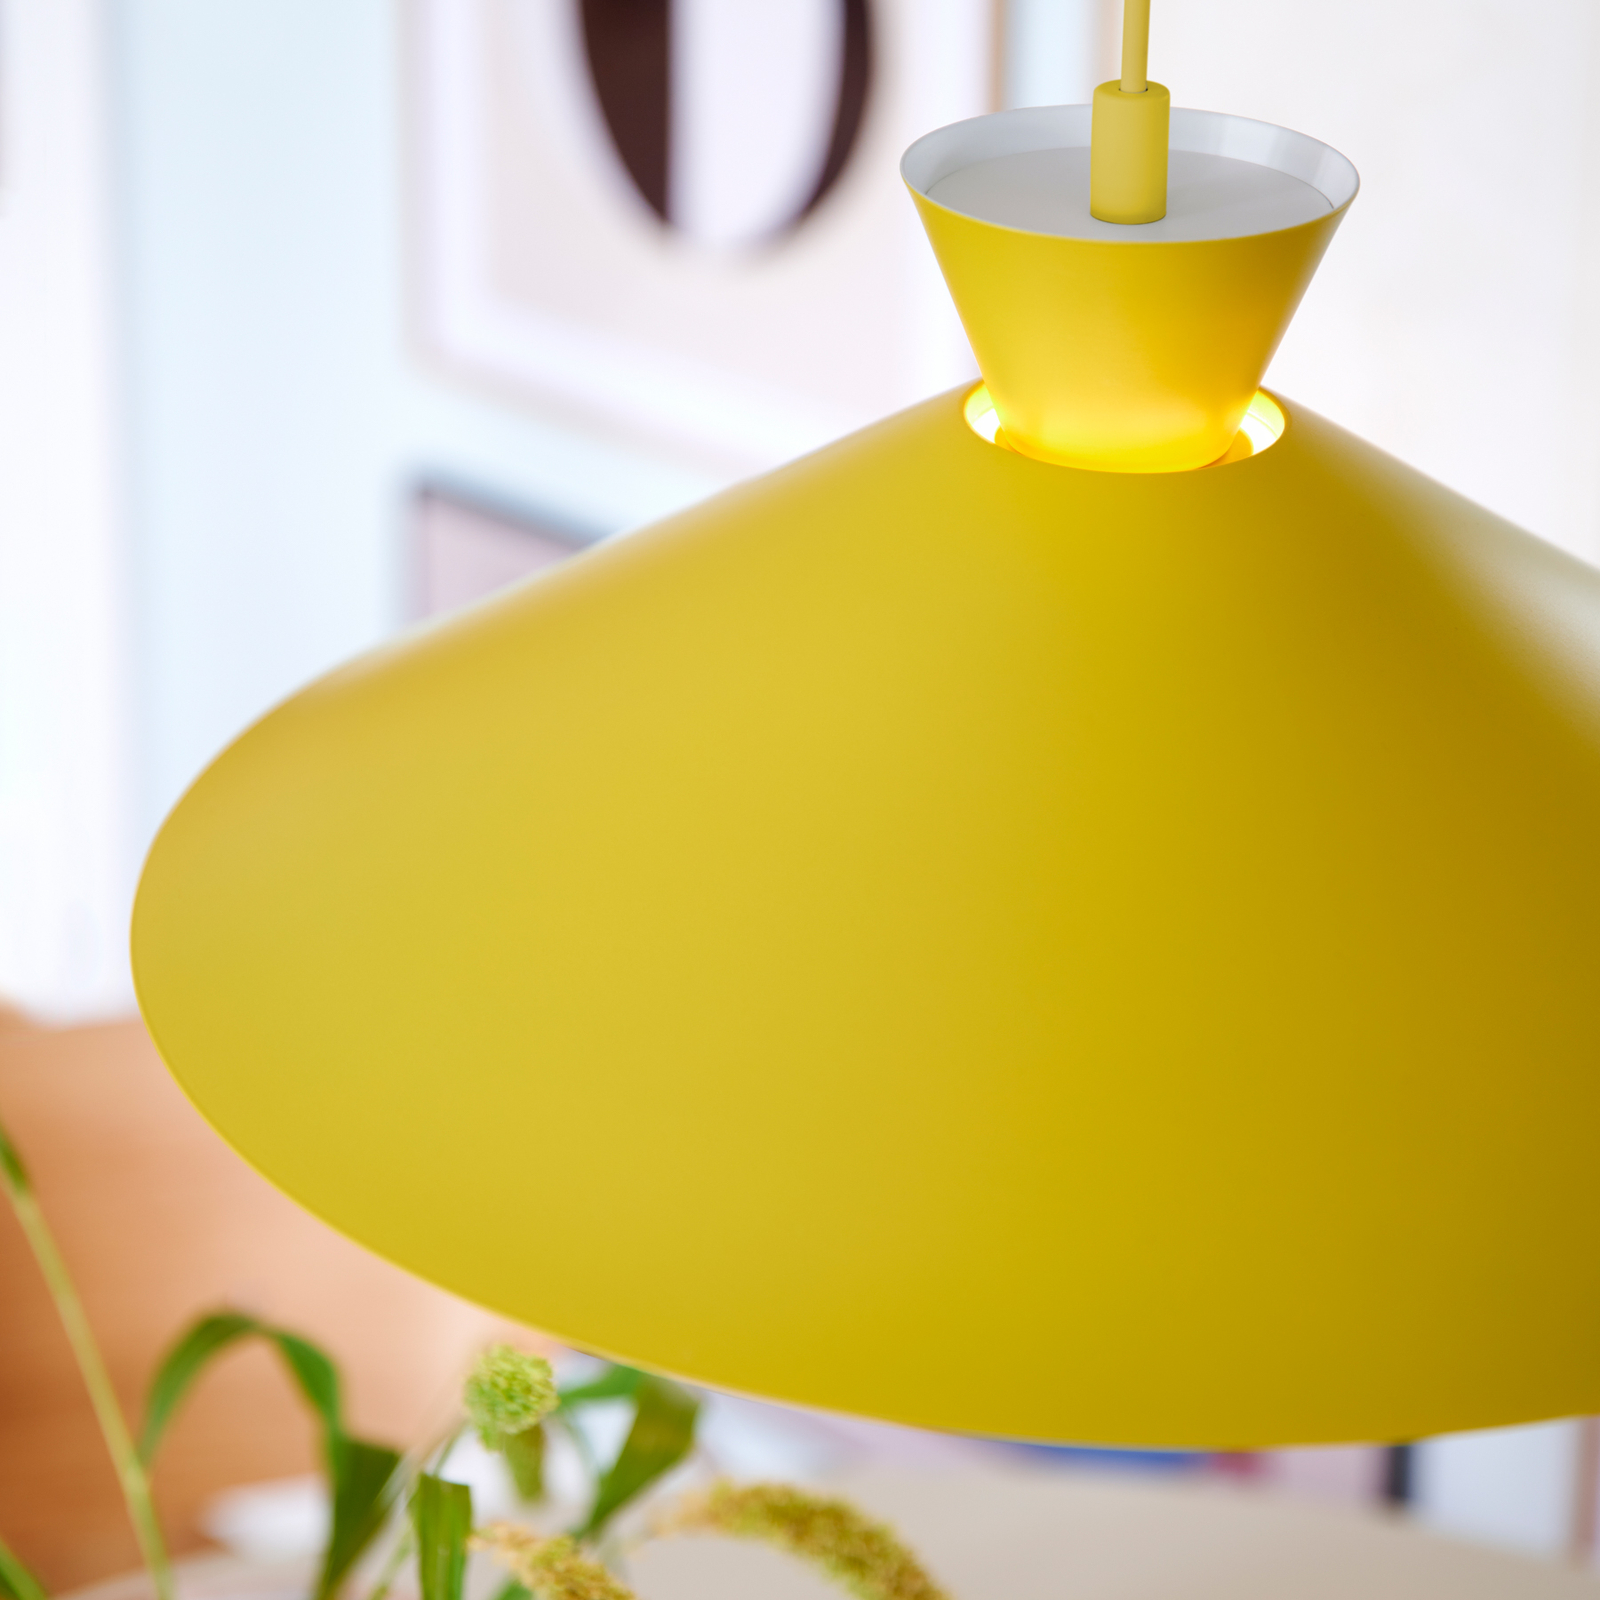 Lámpara colgante Dial con pantalla de metal, amarillo, Ø 45 cm